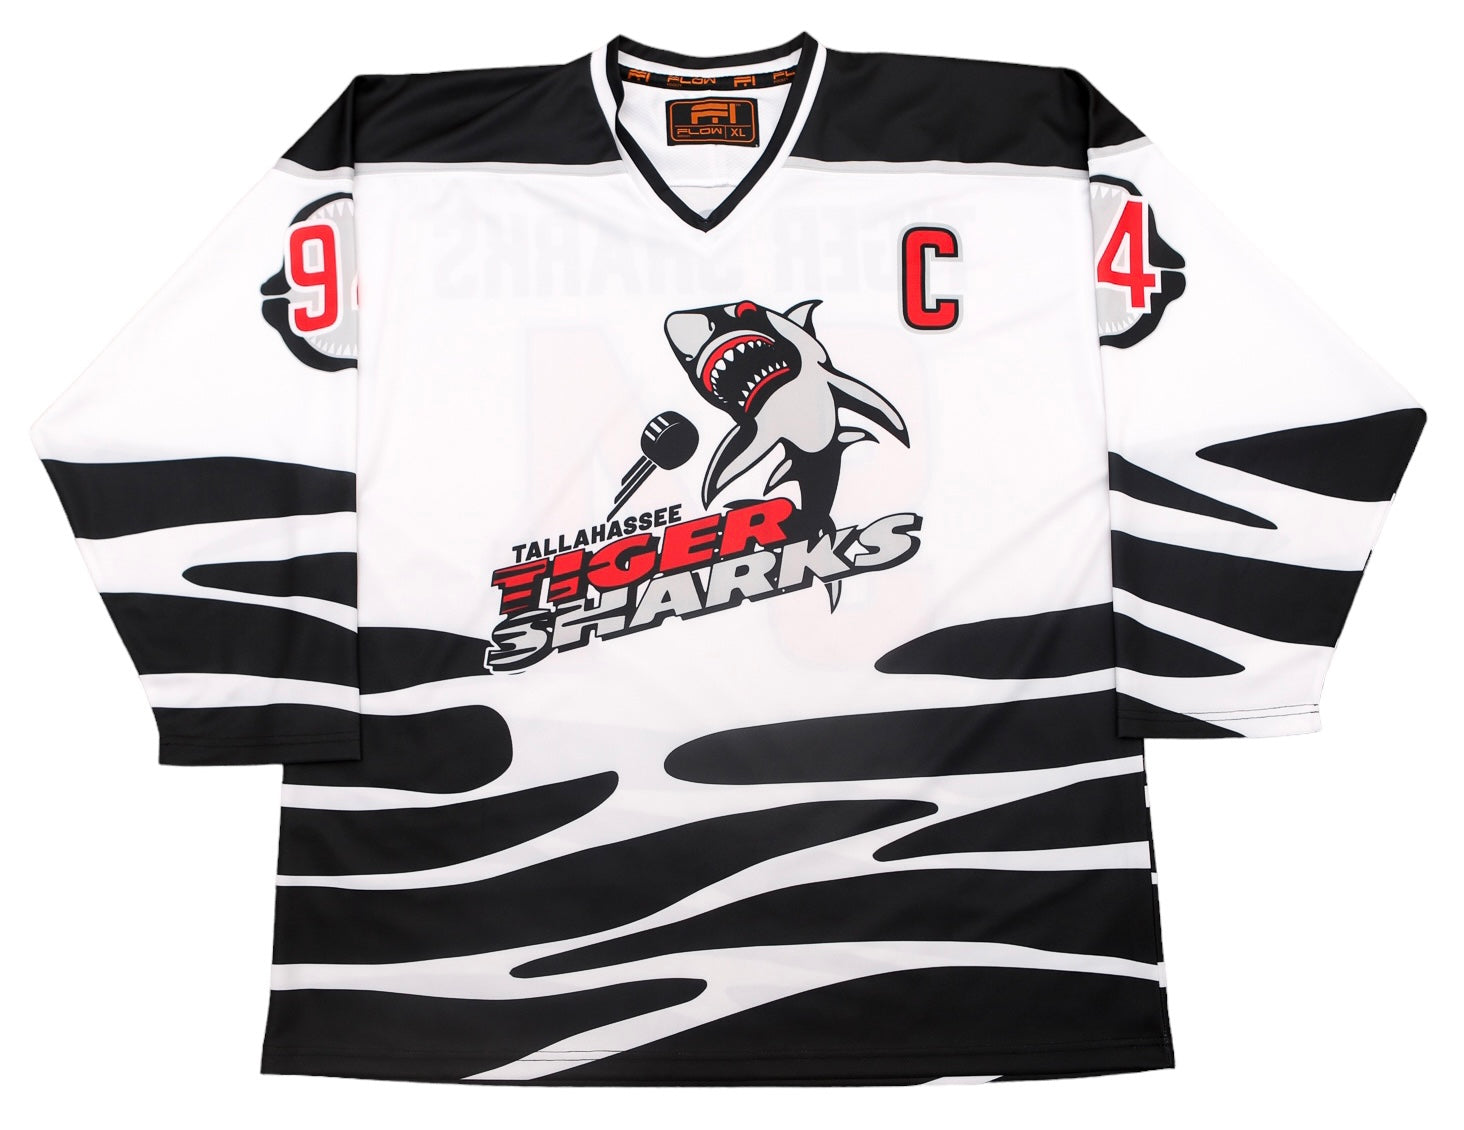 San Jose Sharks jerseys for sale! : r/hockeyjerseys